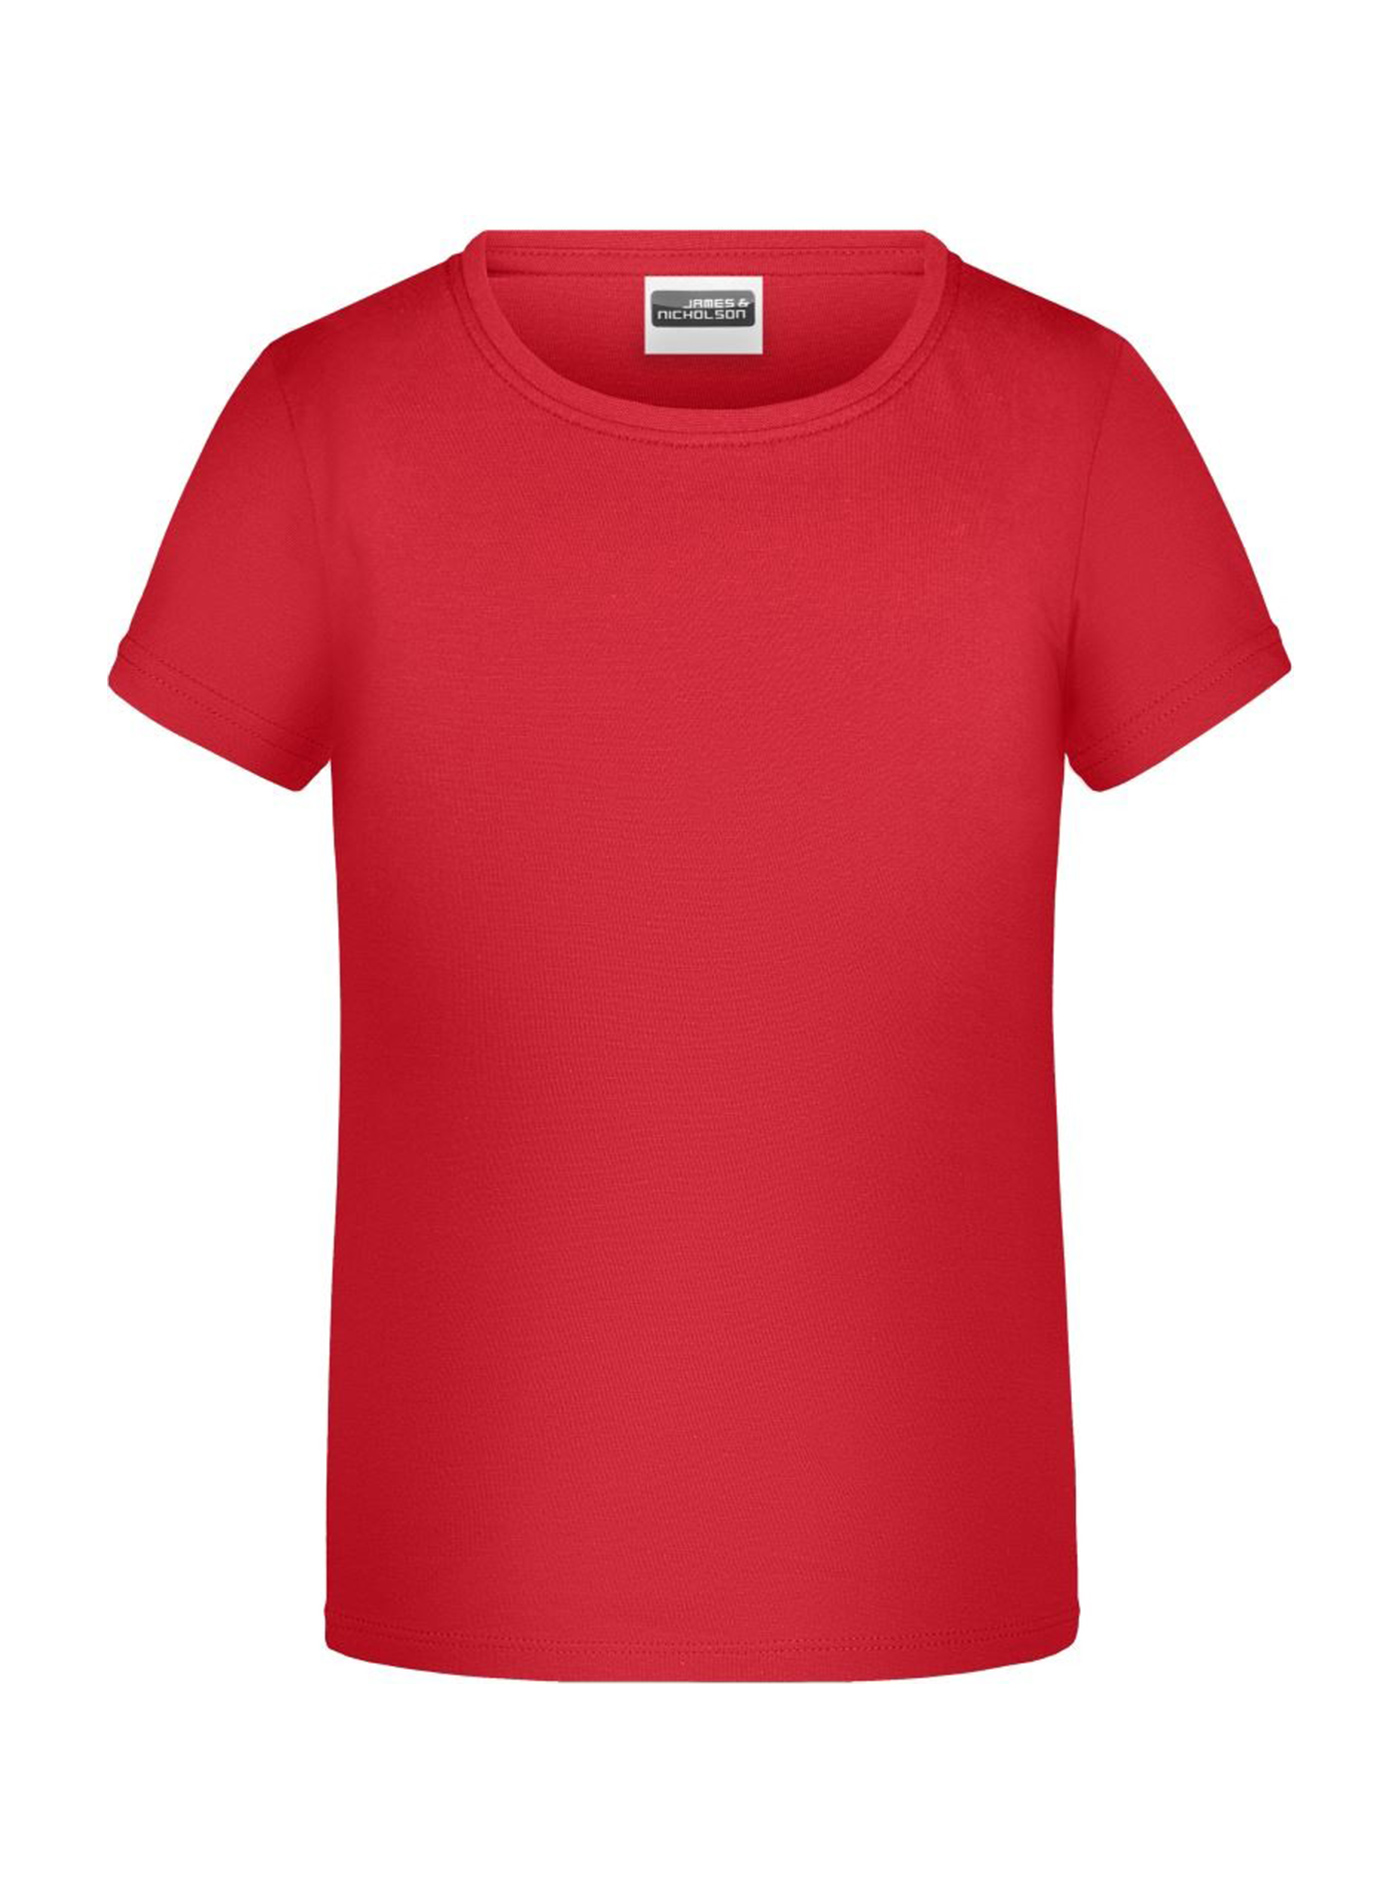 Dívčí tričko James & Nicholson - Červená M